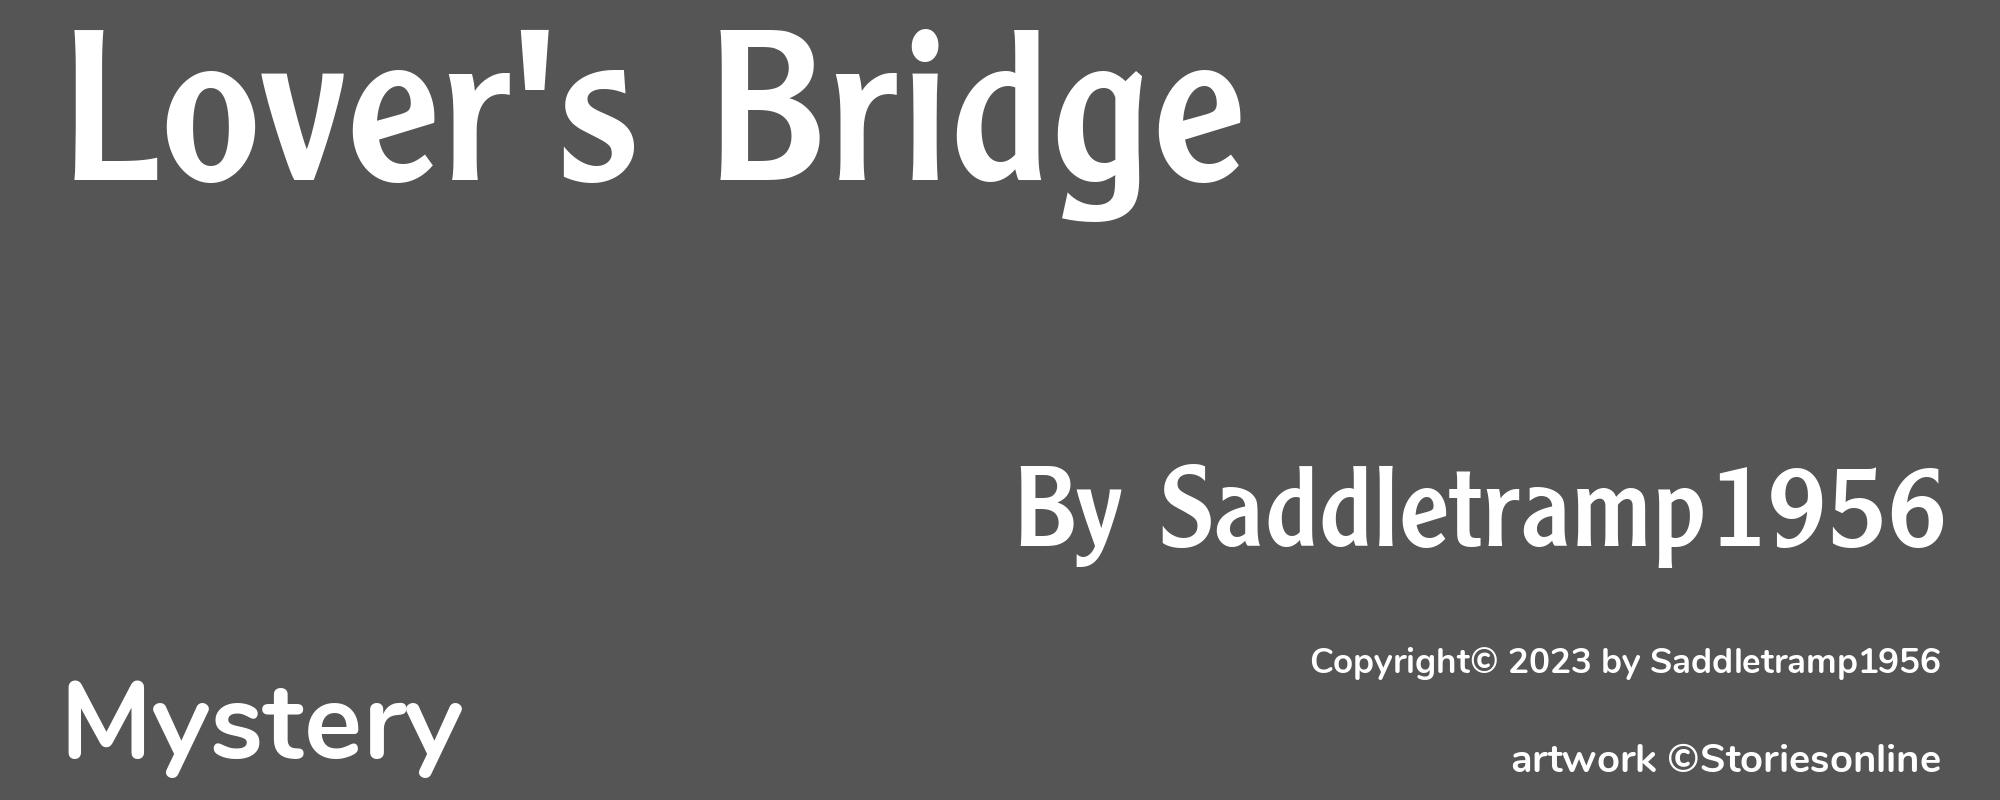 Lover's Bridge - Cover